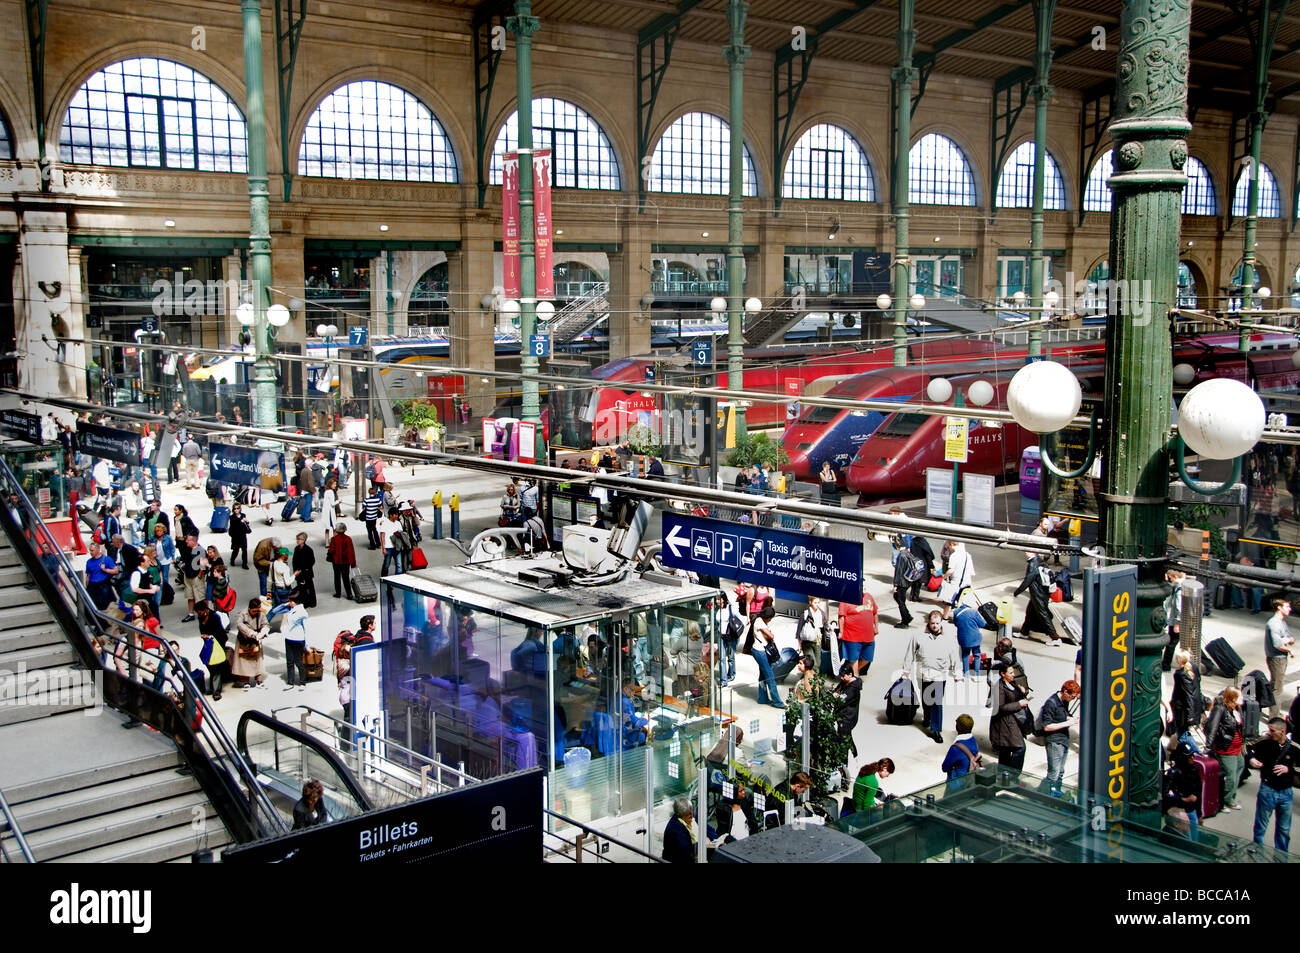 Gare du Nord Paris France TGV Thalys Eurostar railway station Stock Photo